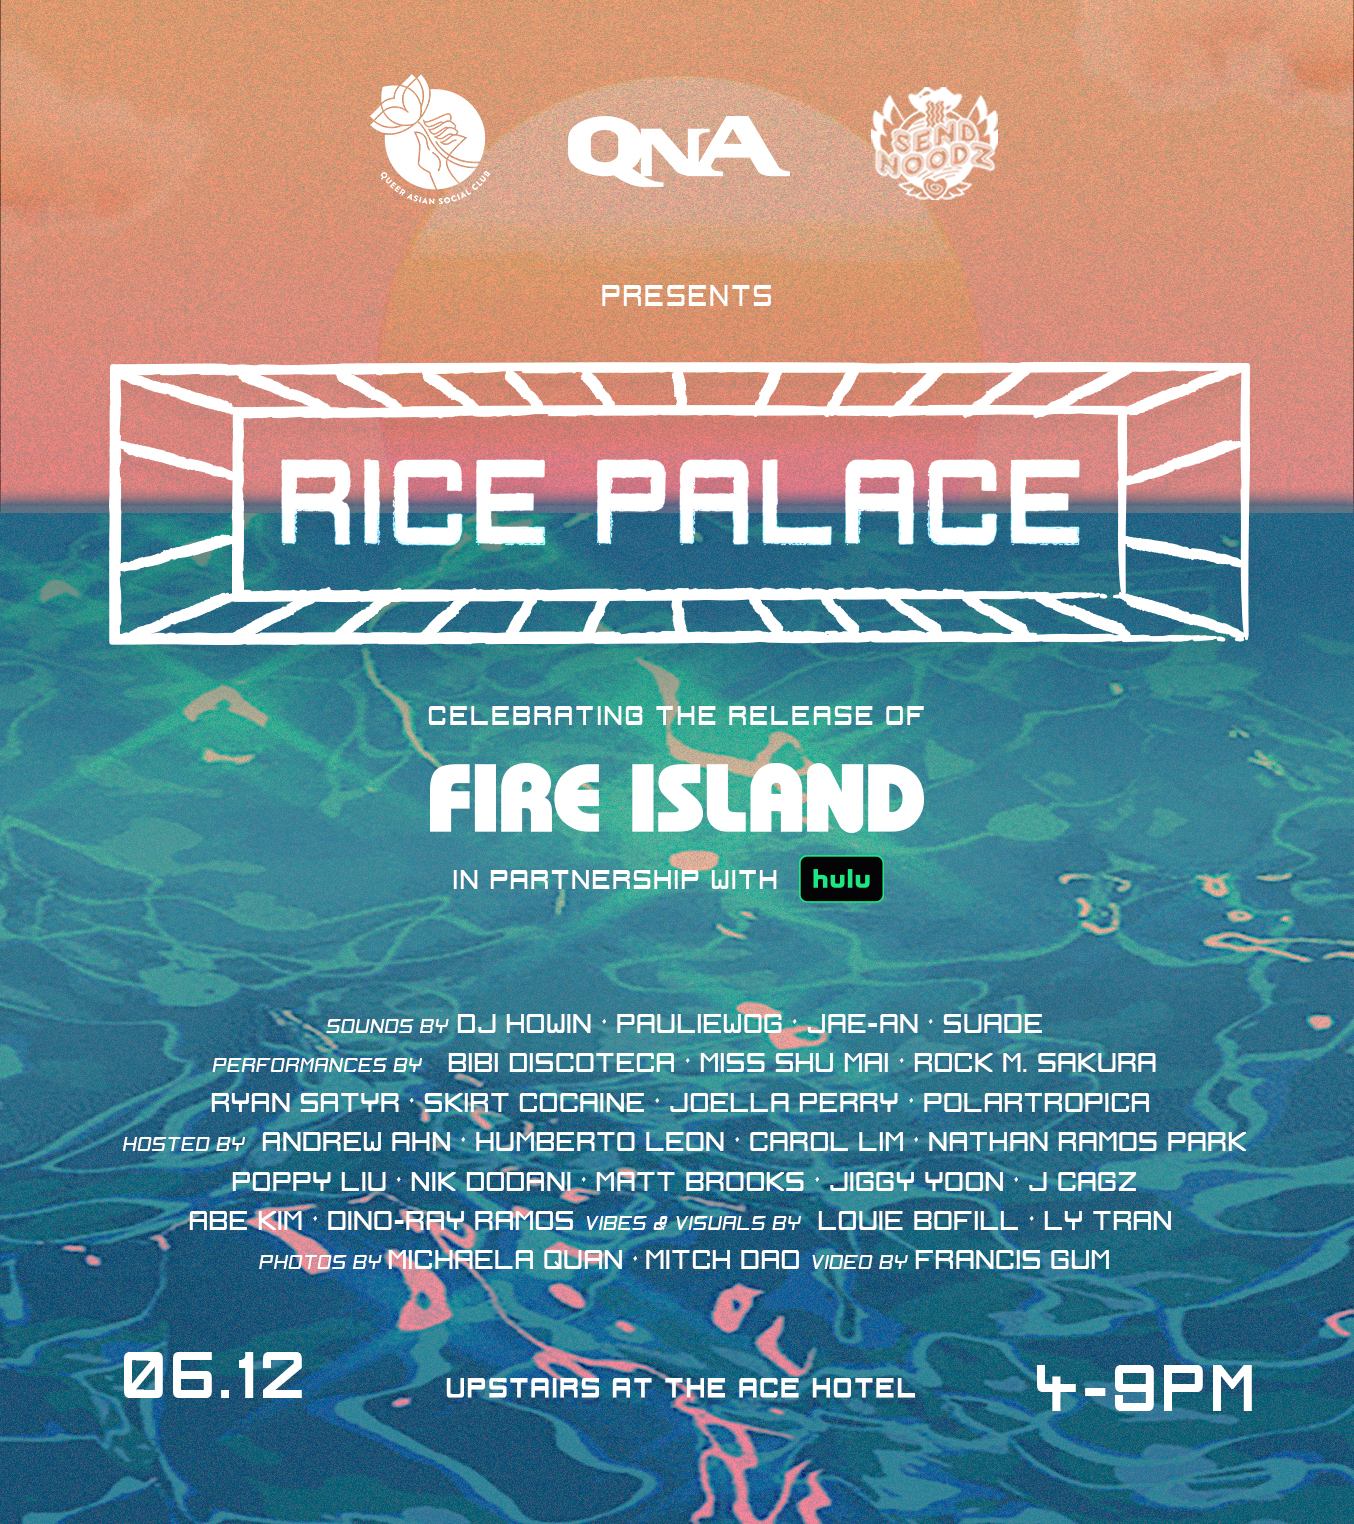 Rice Palace promo - June 12